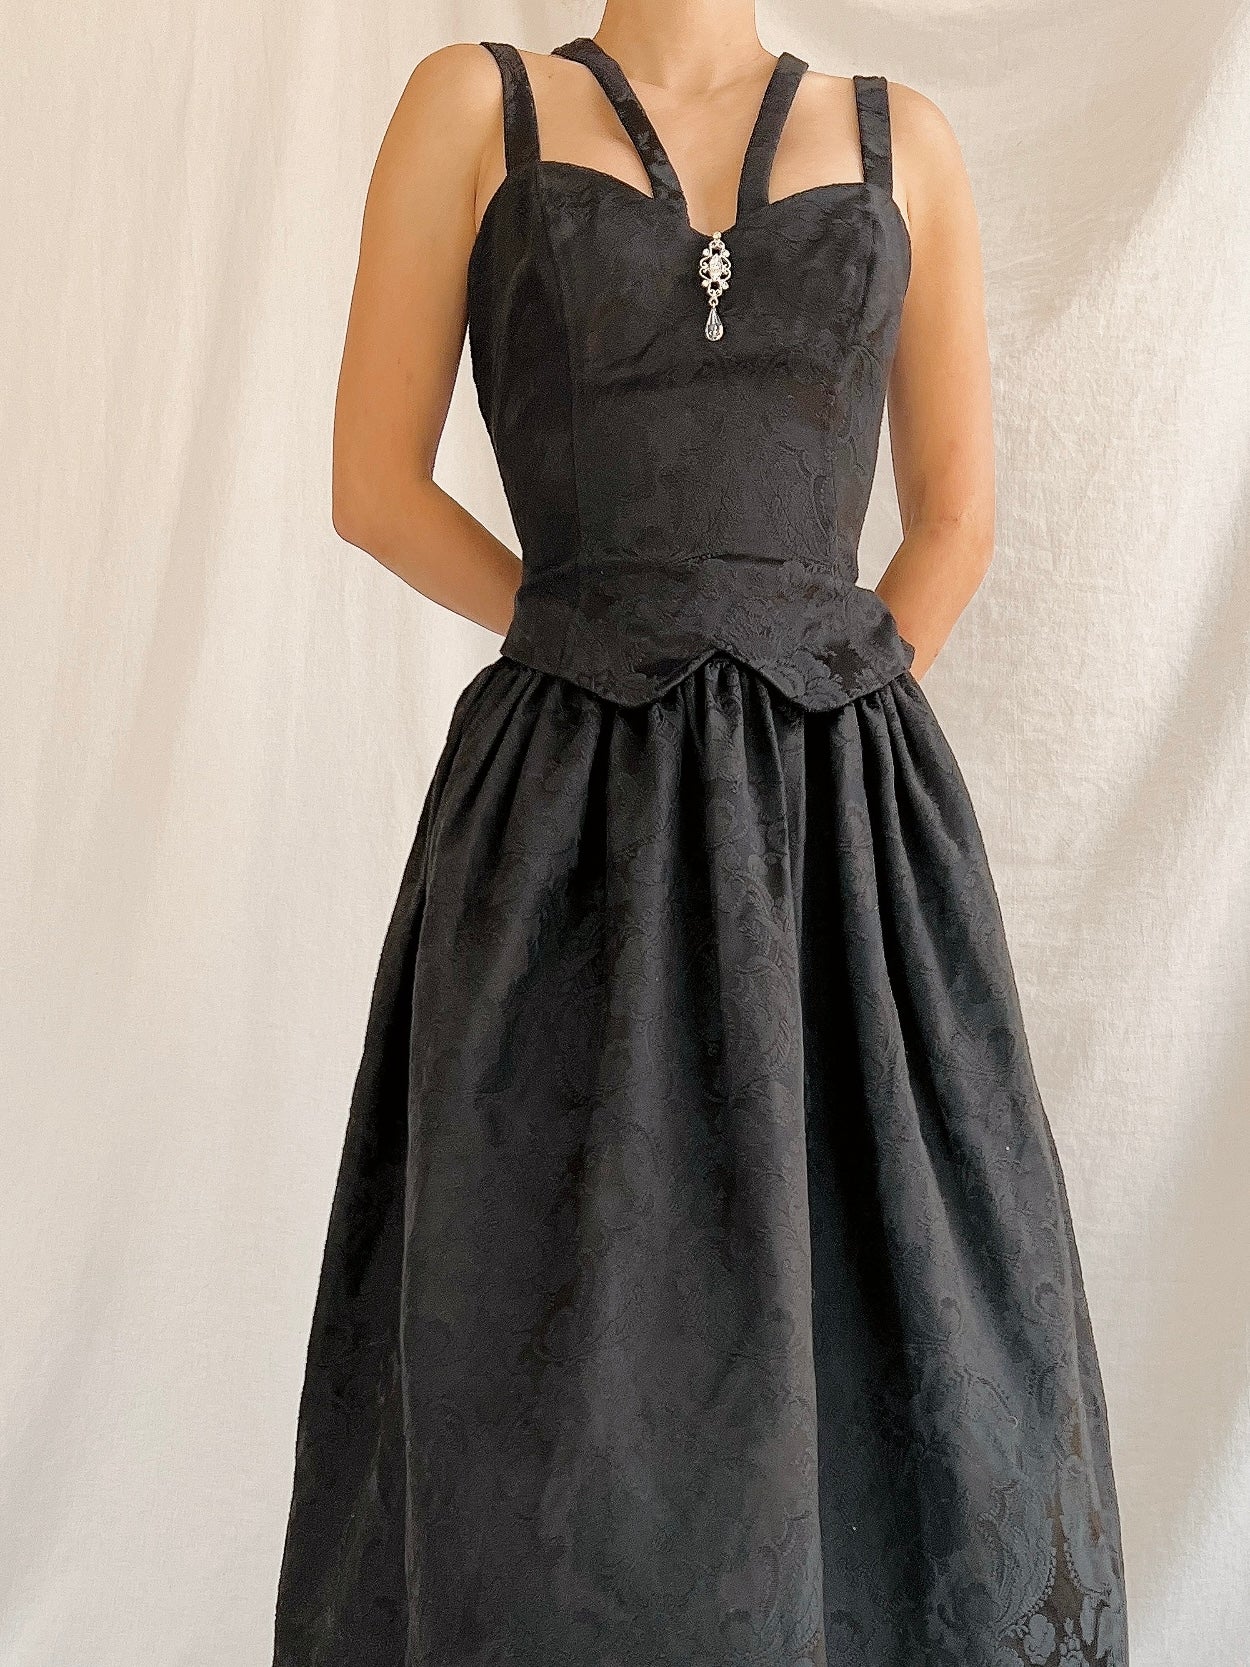 Vintage Jessica McClintock/Gunne Sax Brocade Dress - XS